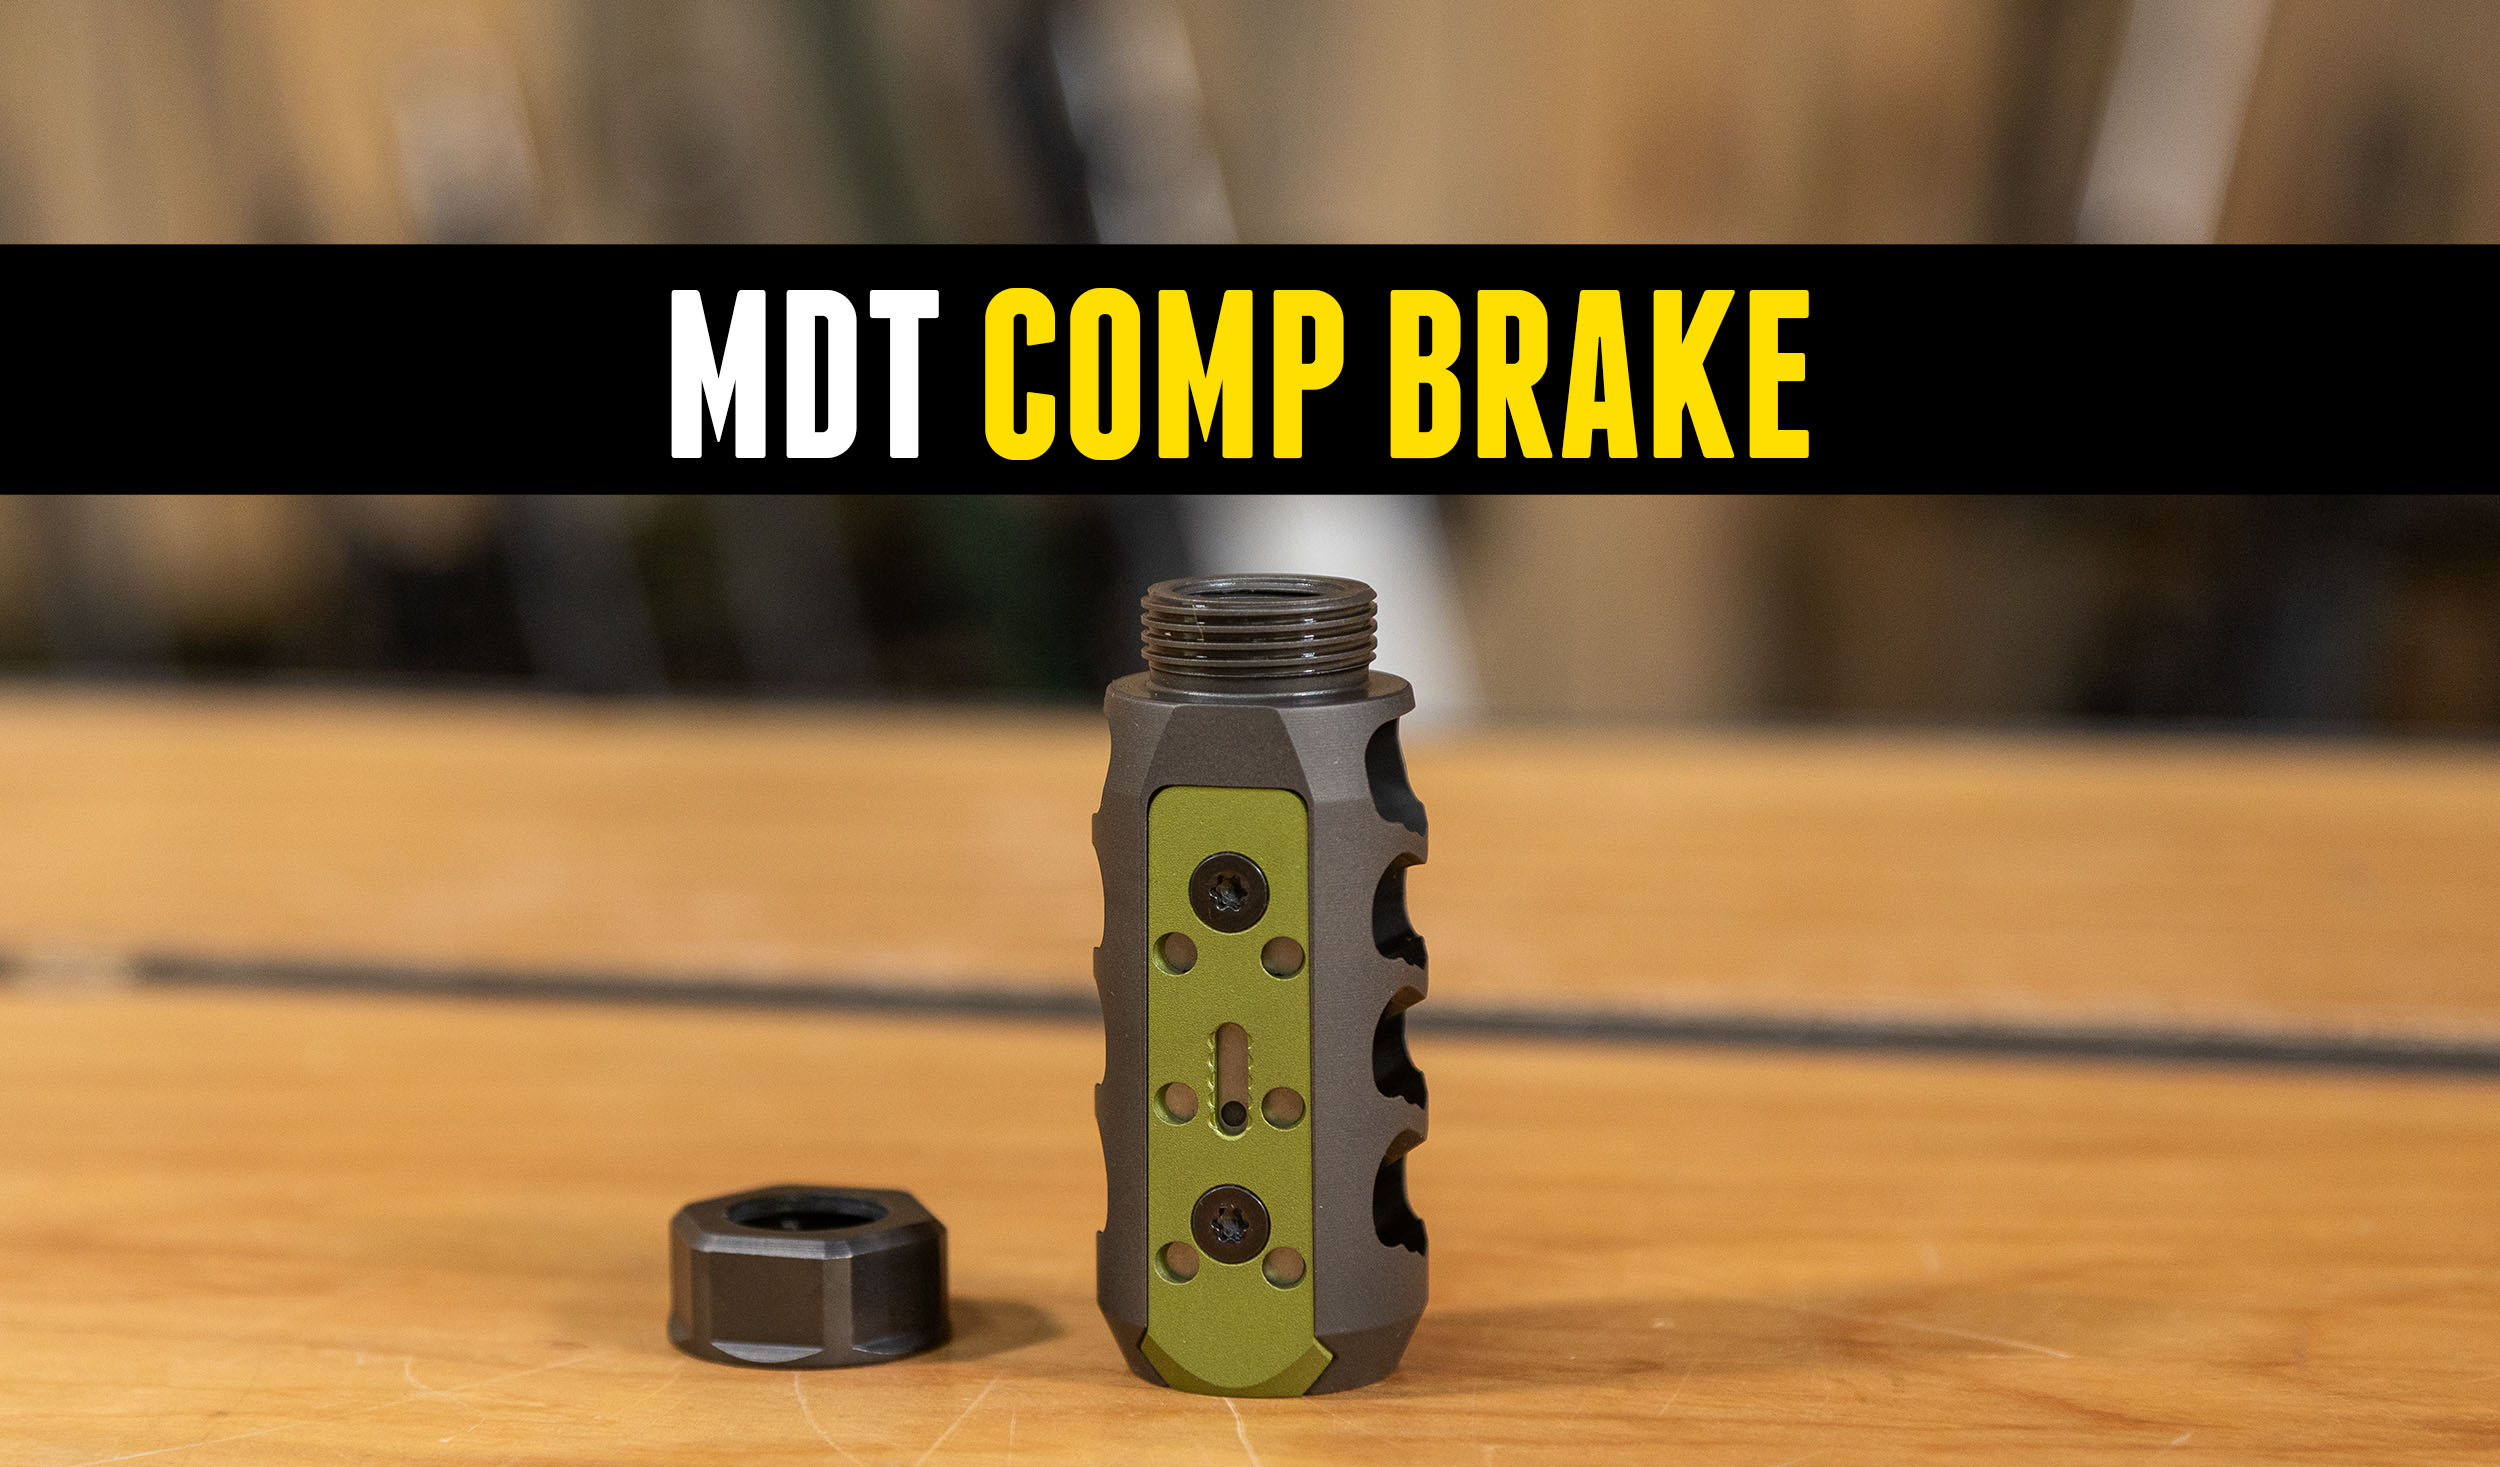 MDT Tactical Muzzle Brake 